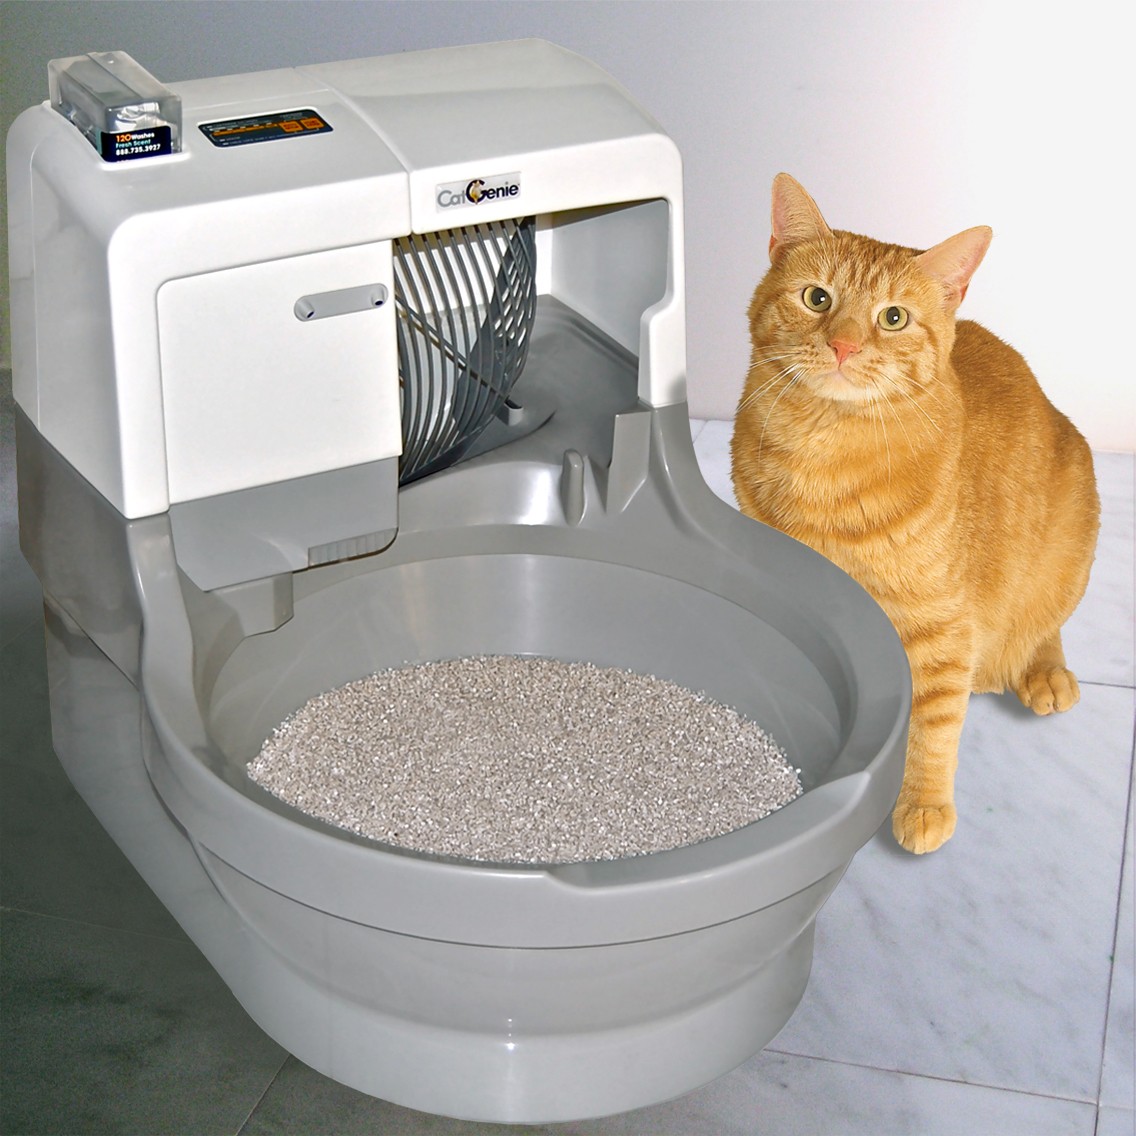 Best Self Cleaning Litter Box A Comparison Cat Concerns